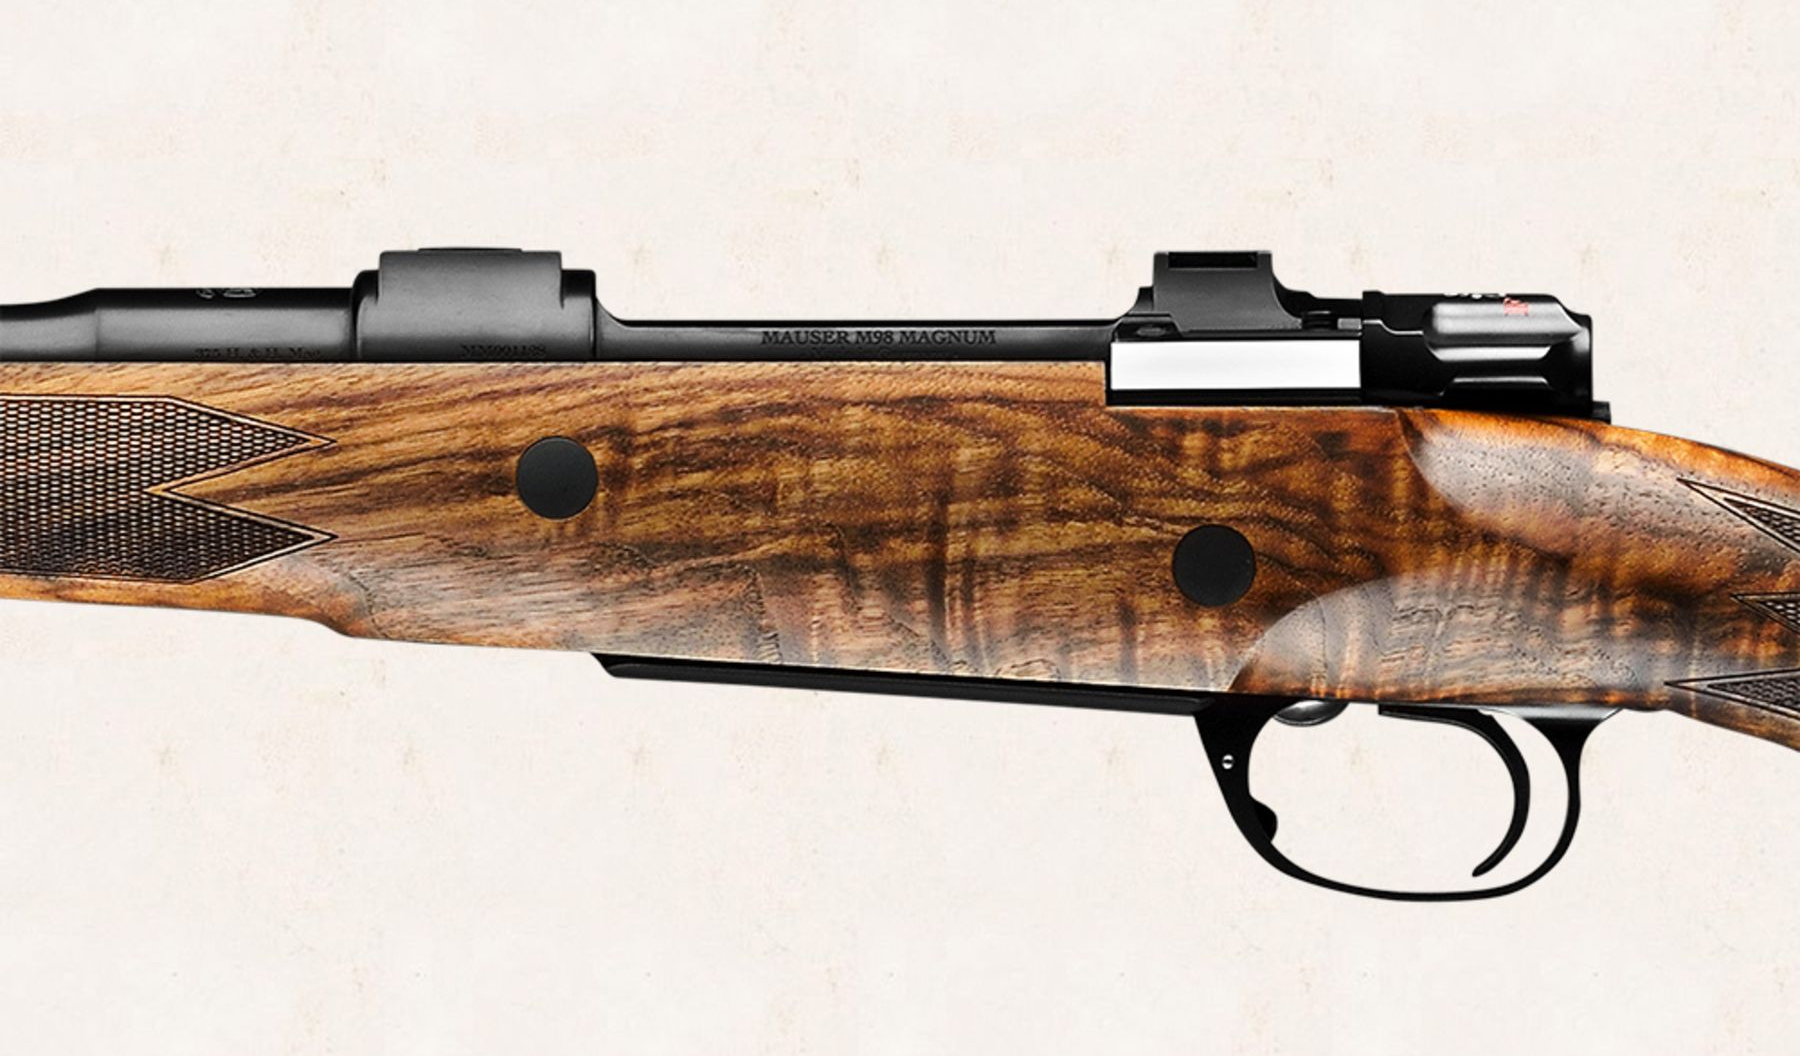 Mauser M98 Magnum rifle